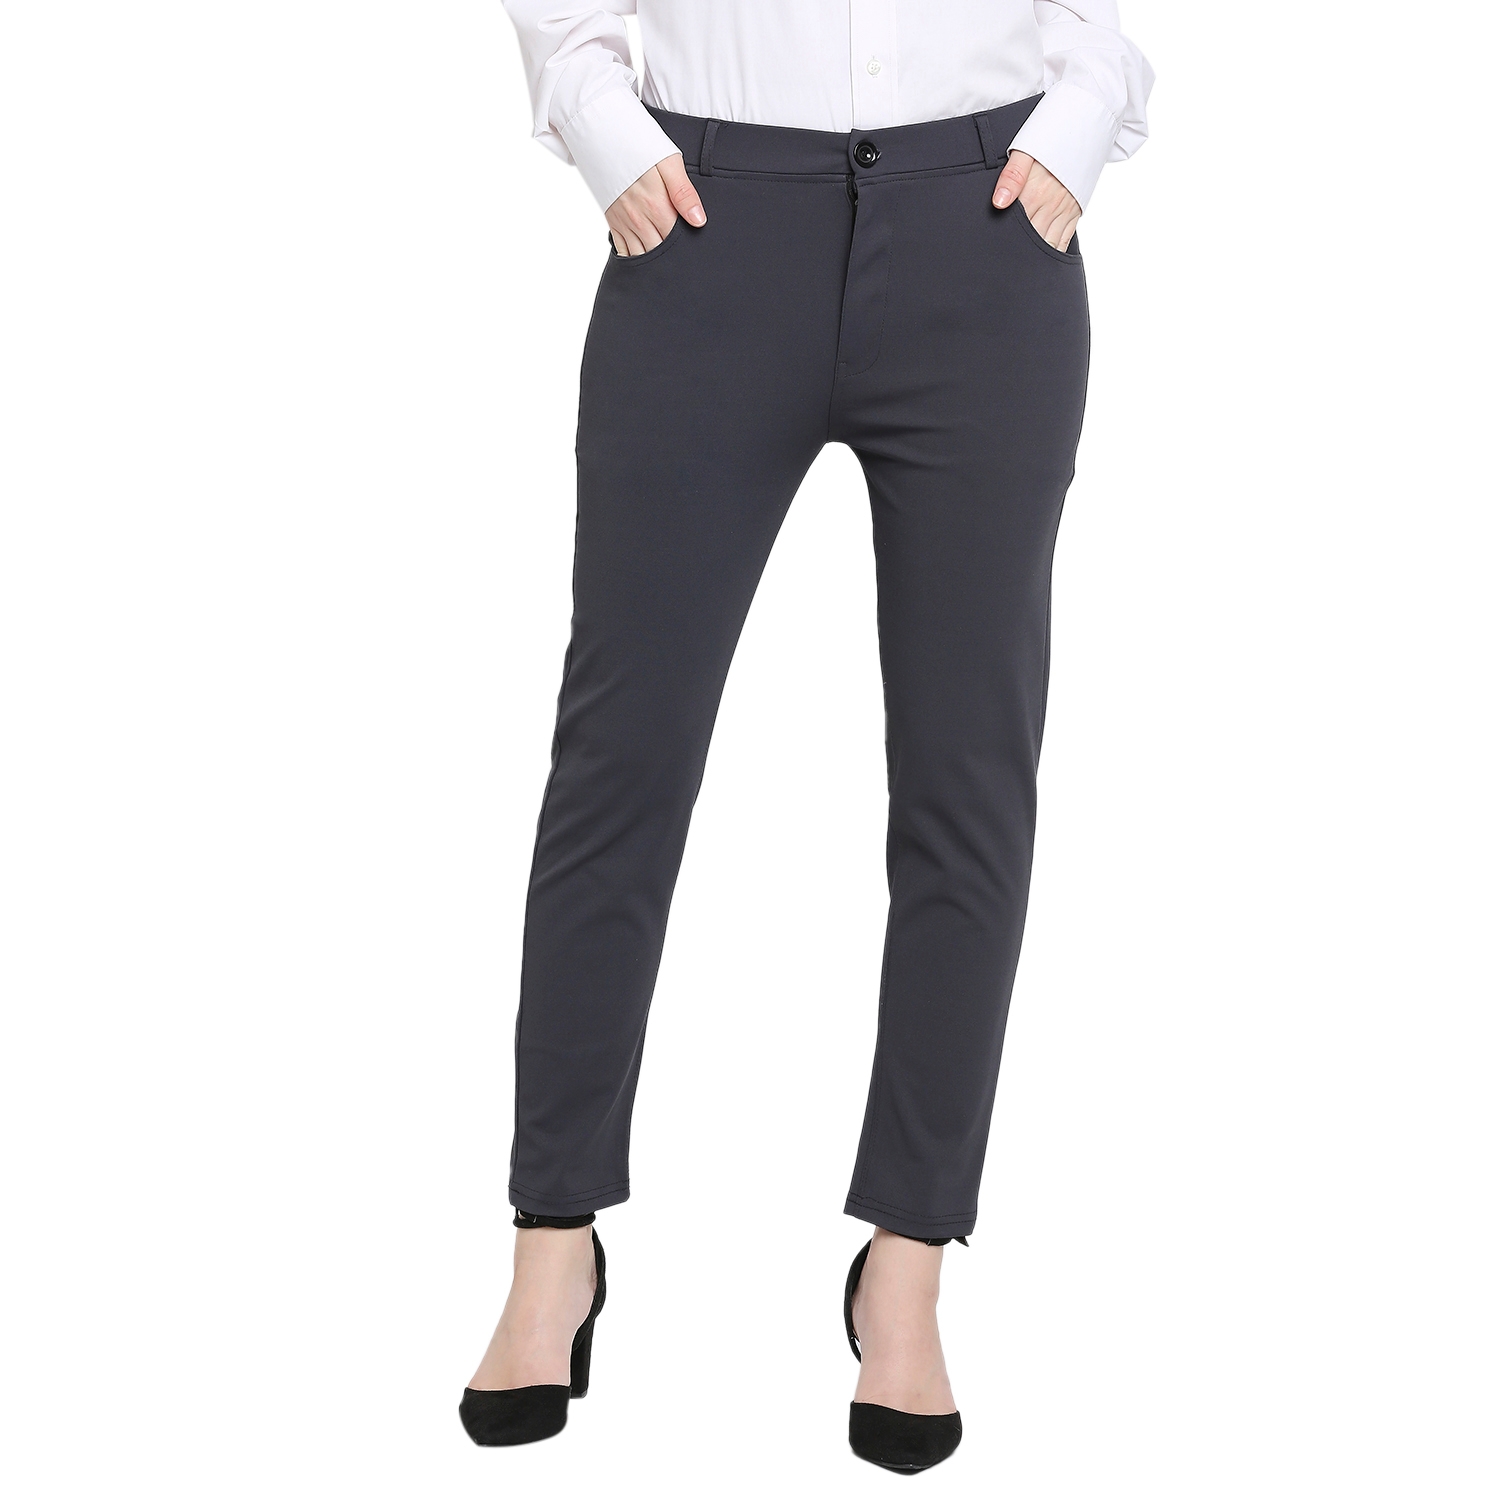 Buy Men Grey Check Slim Fit Formal Trousers Online - 652312 | Peter England